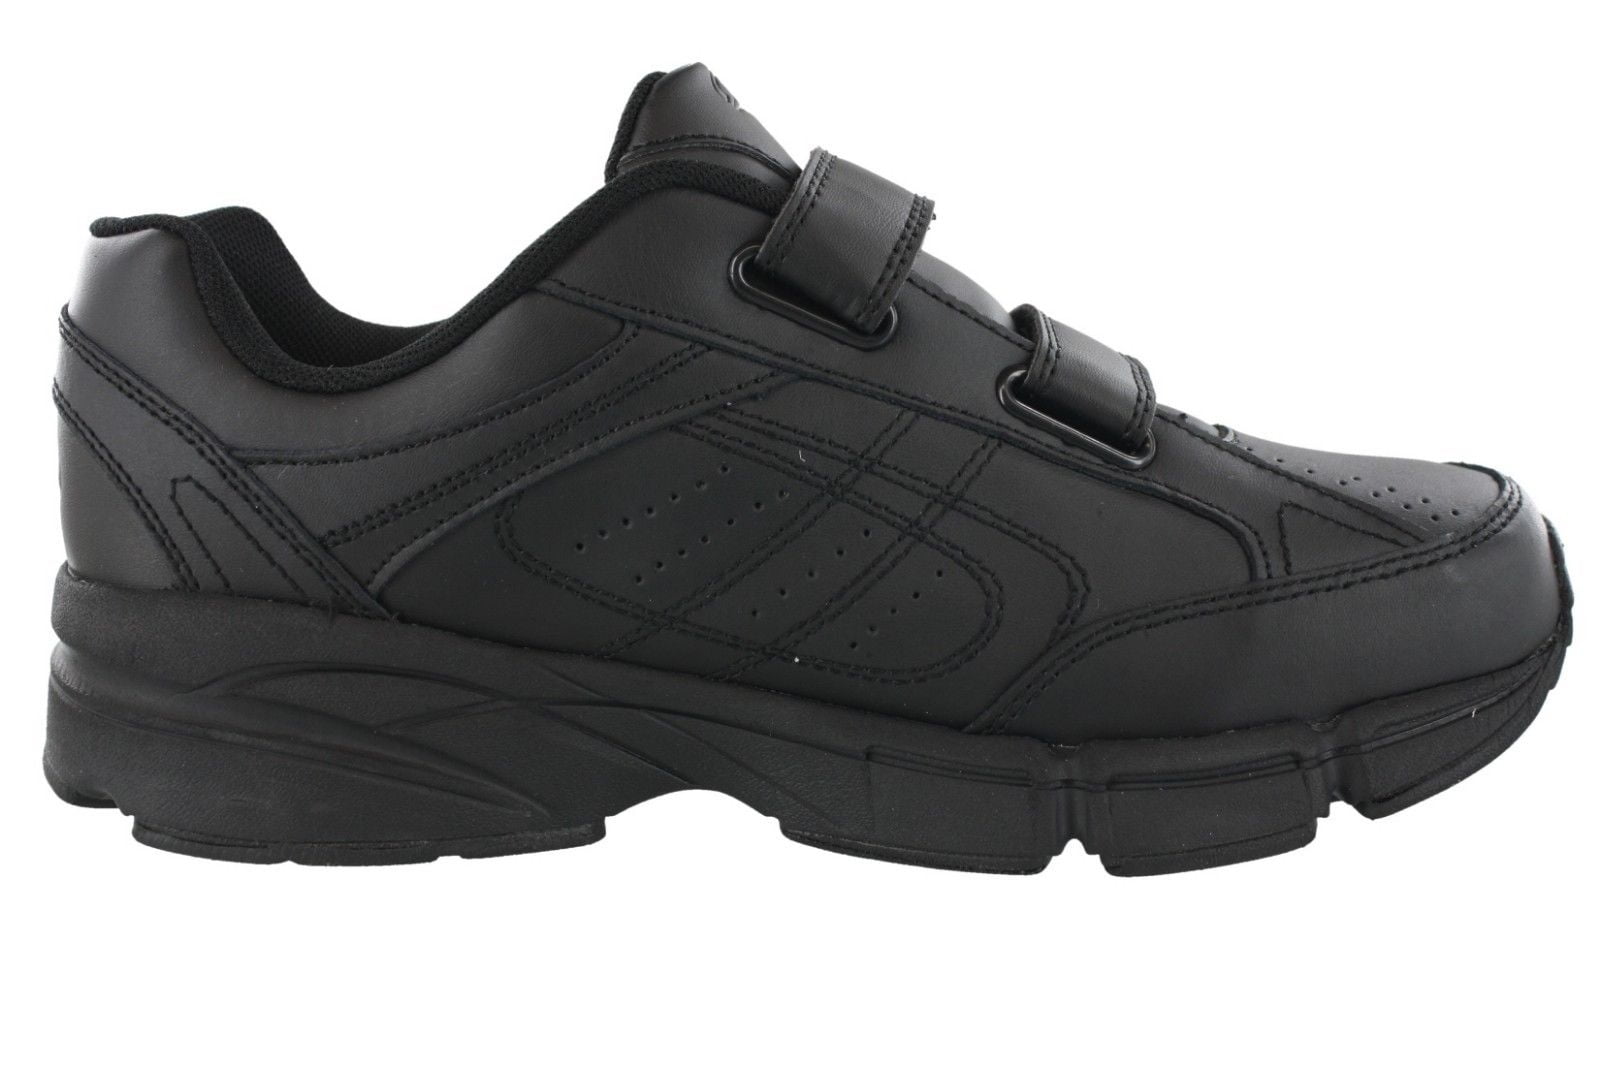 Dr. Scholls Men's Omega Dual Strap 2E Width Walking Shoes - Walmart.com